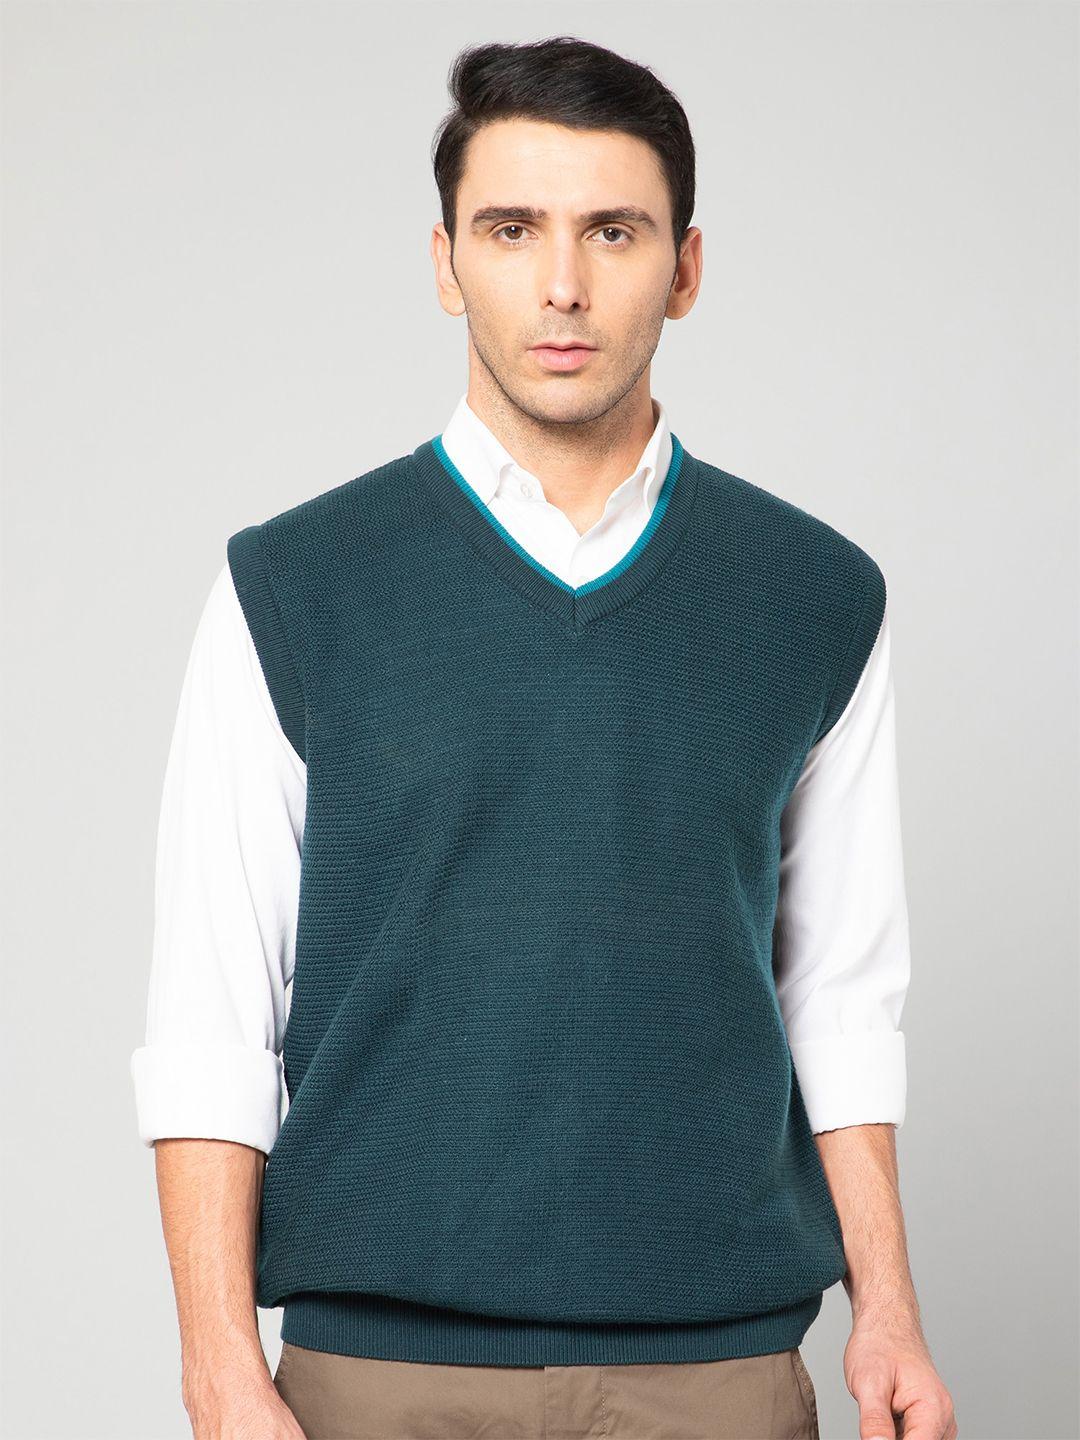 cantabil men teal blue acrylic sweater vest